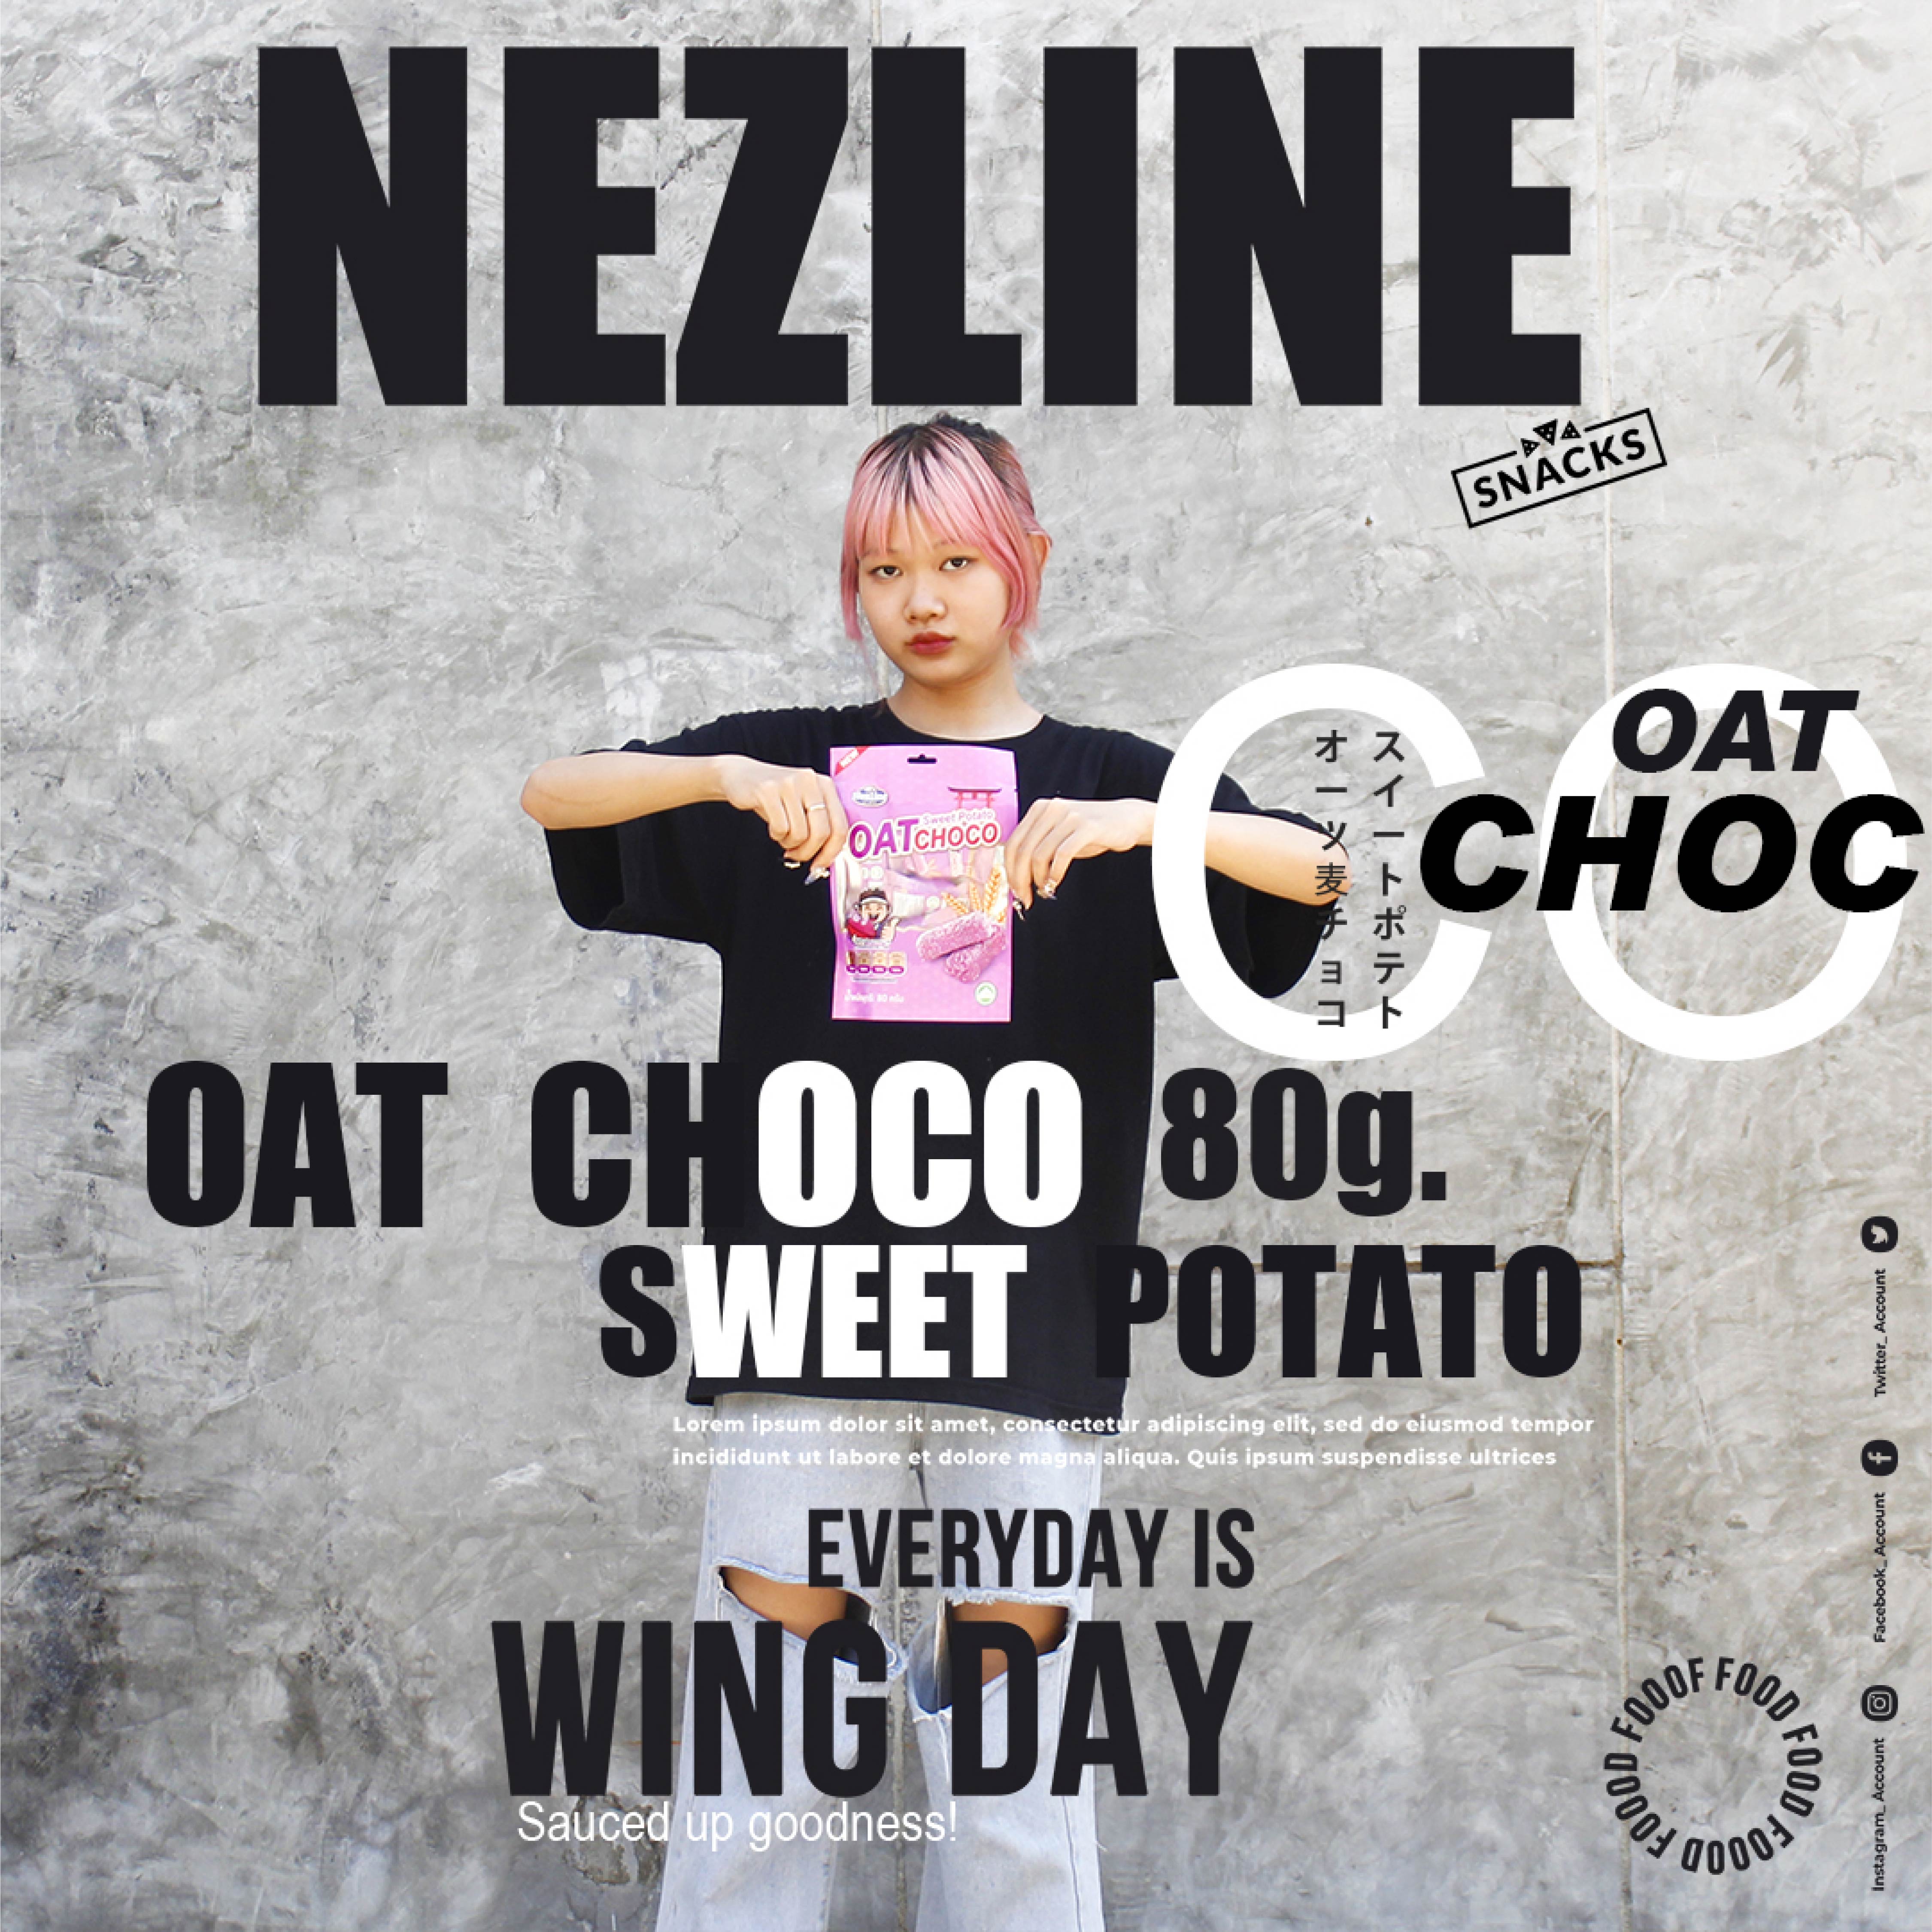 OAT CHOCO Sweet Potato Nezline